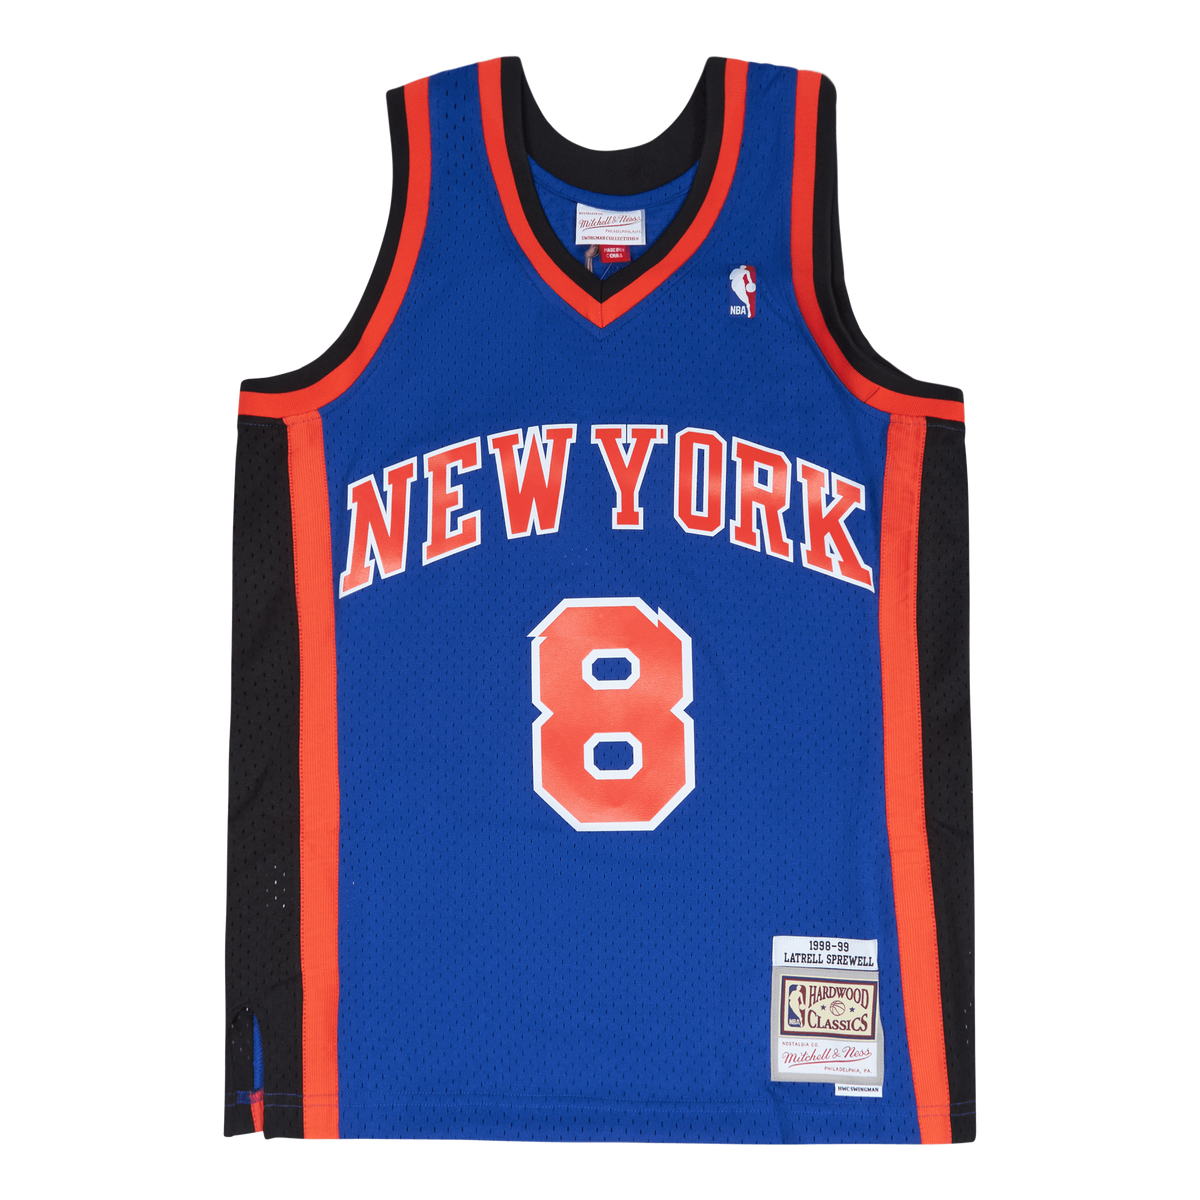 Knicks Swingman Jersey - Latrell Sprewell